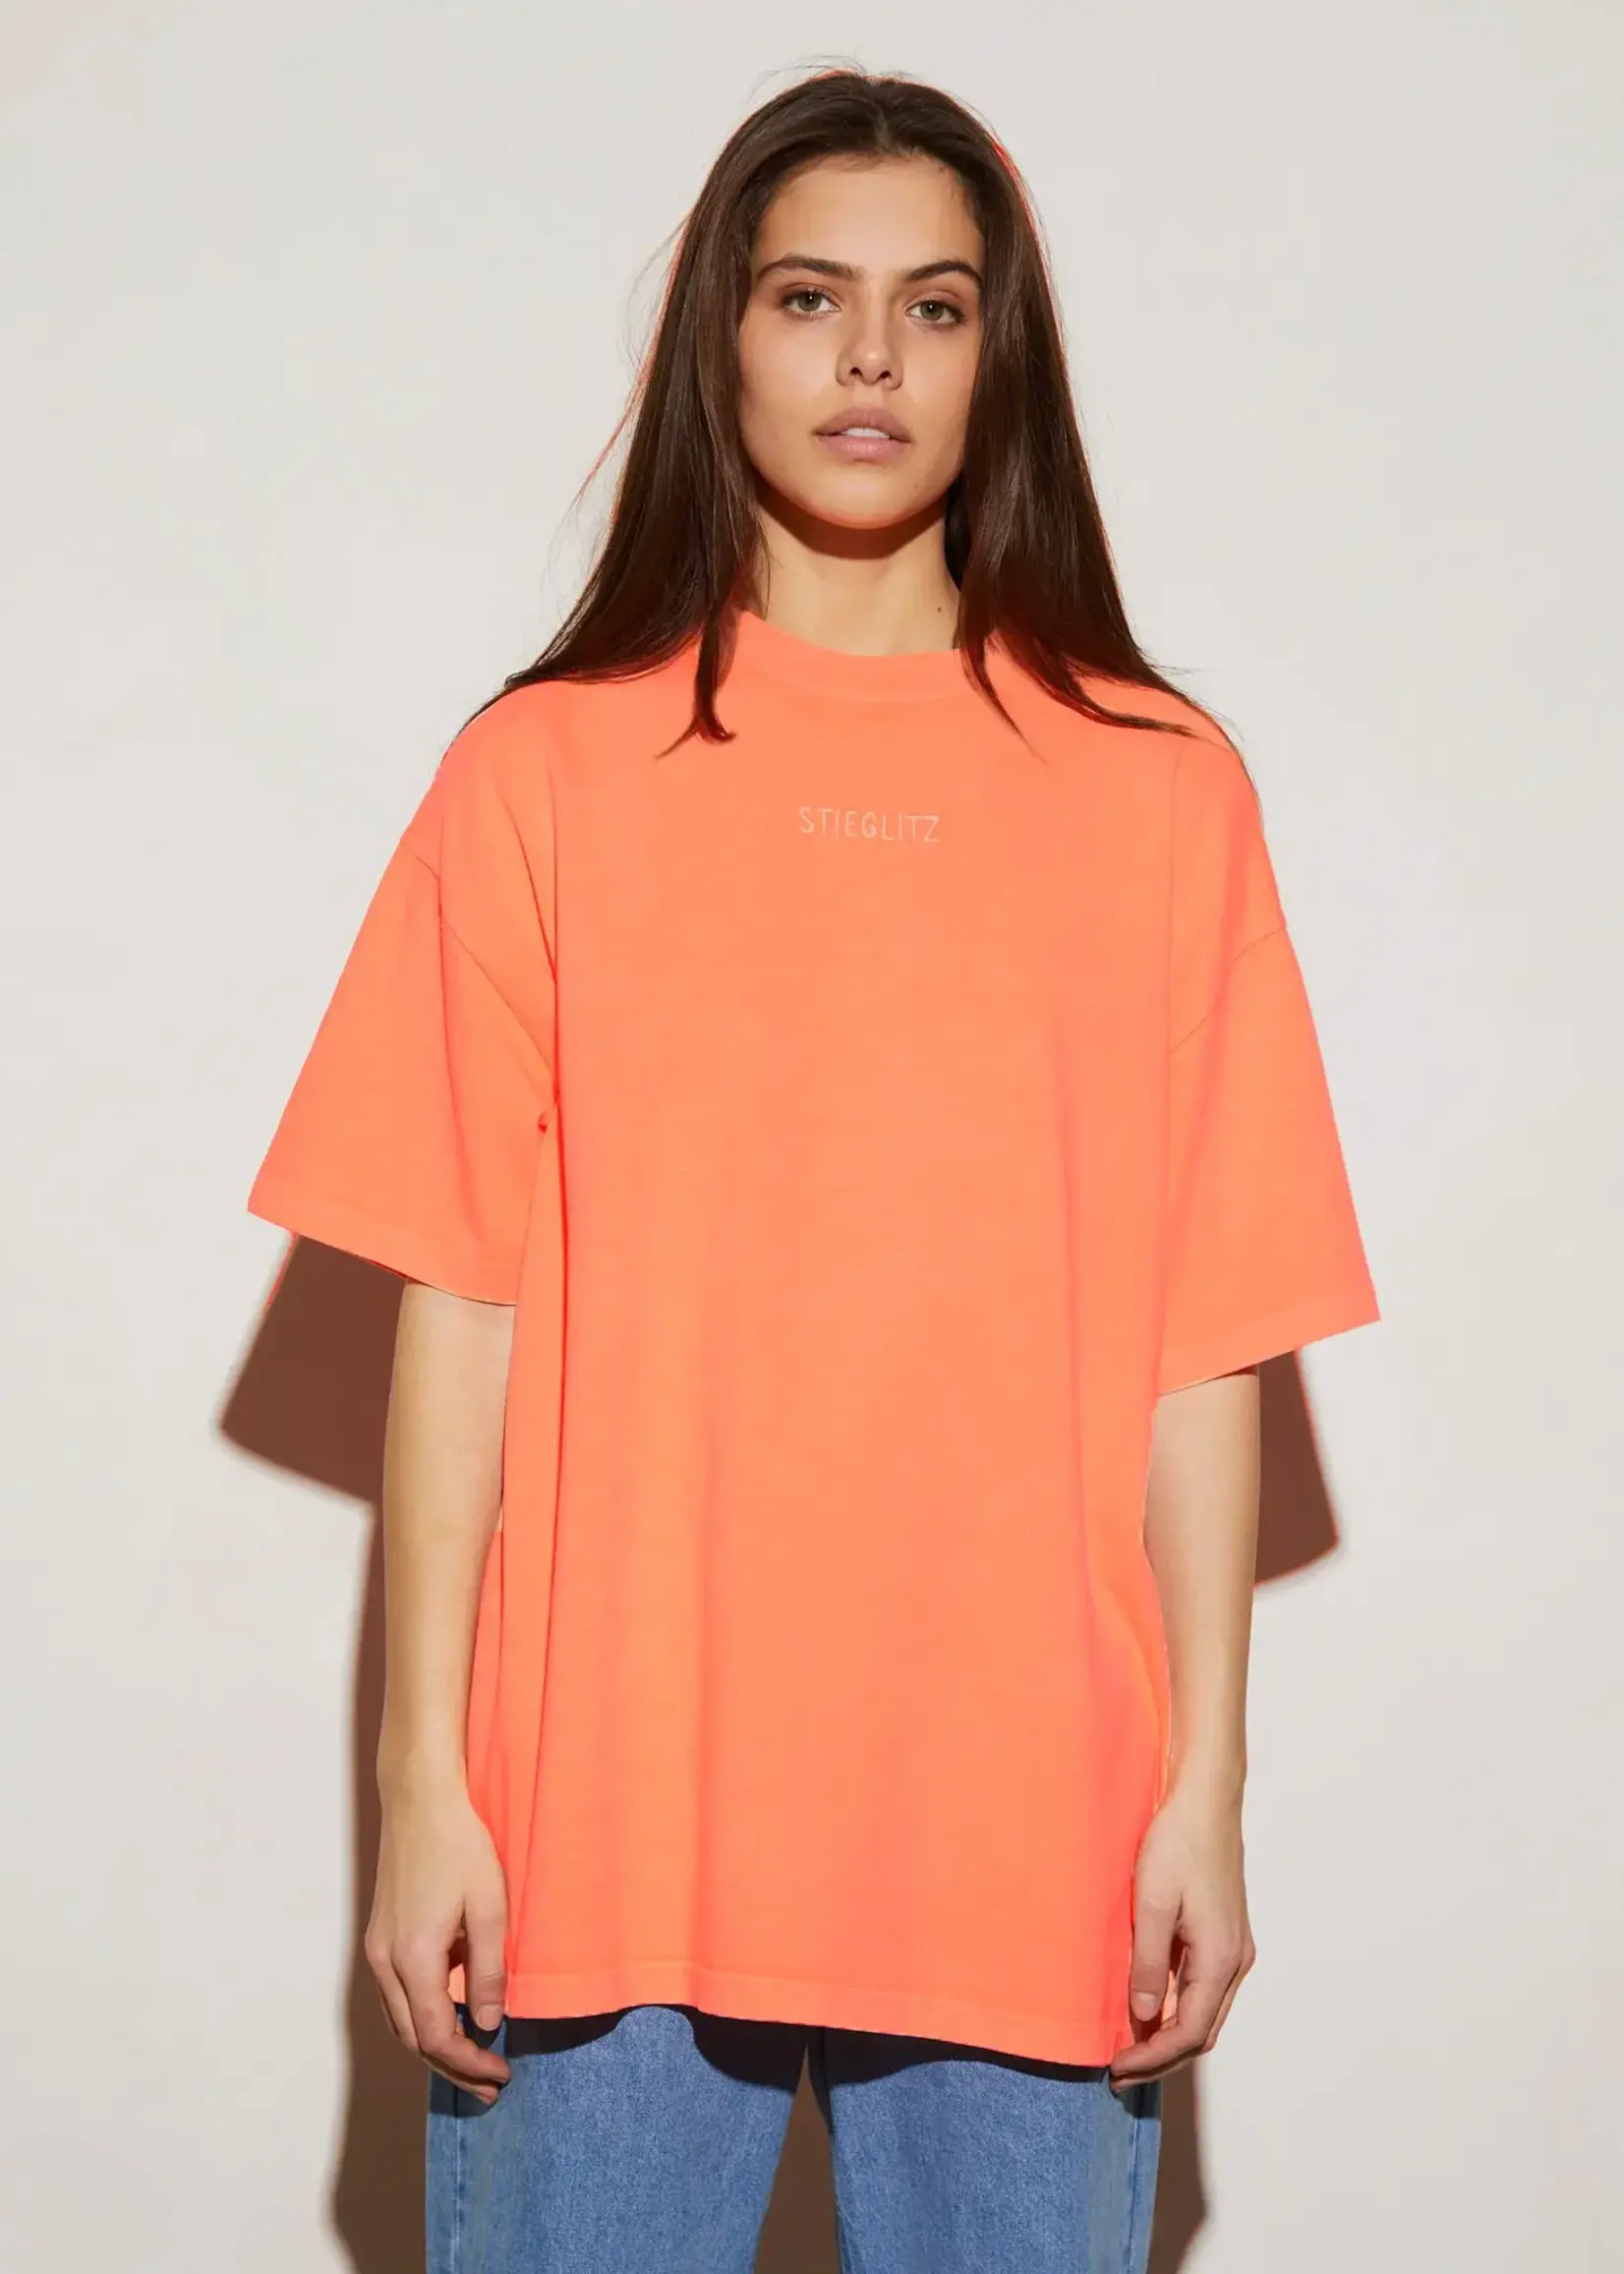 Stieglitz Garment Dyed Oversized T-shirt - Orange